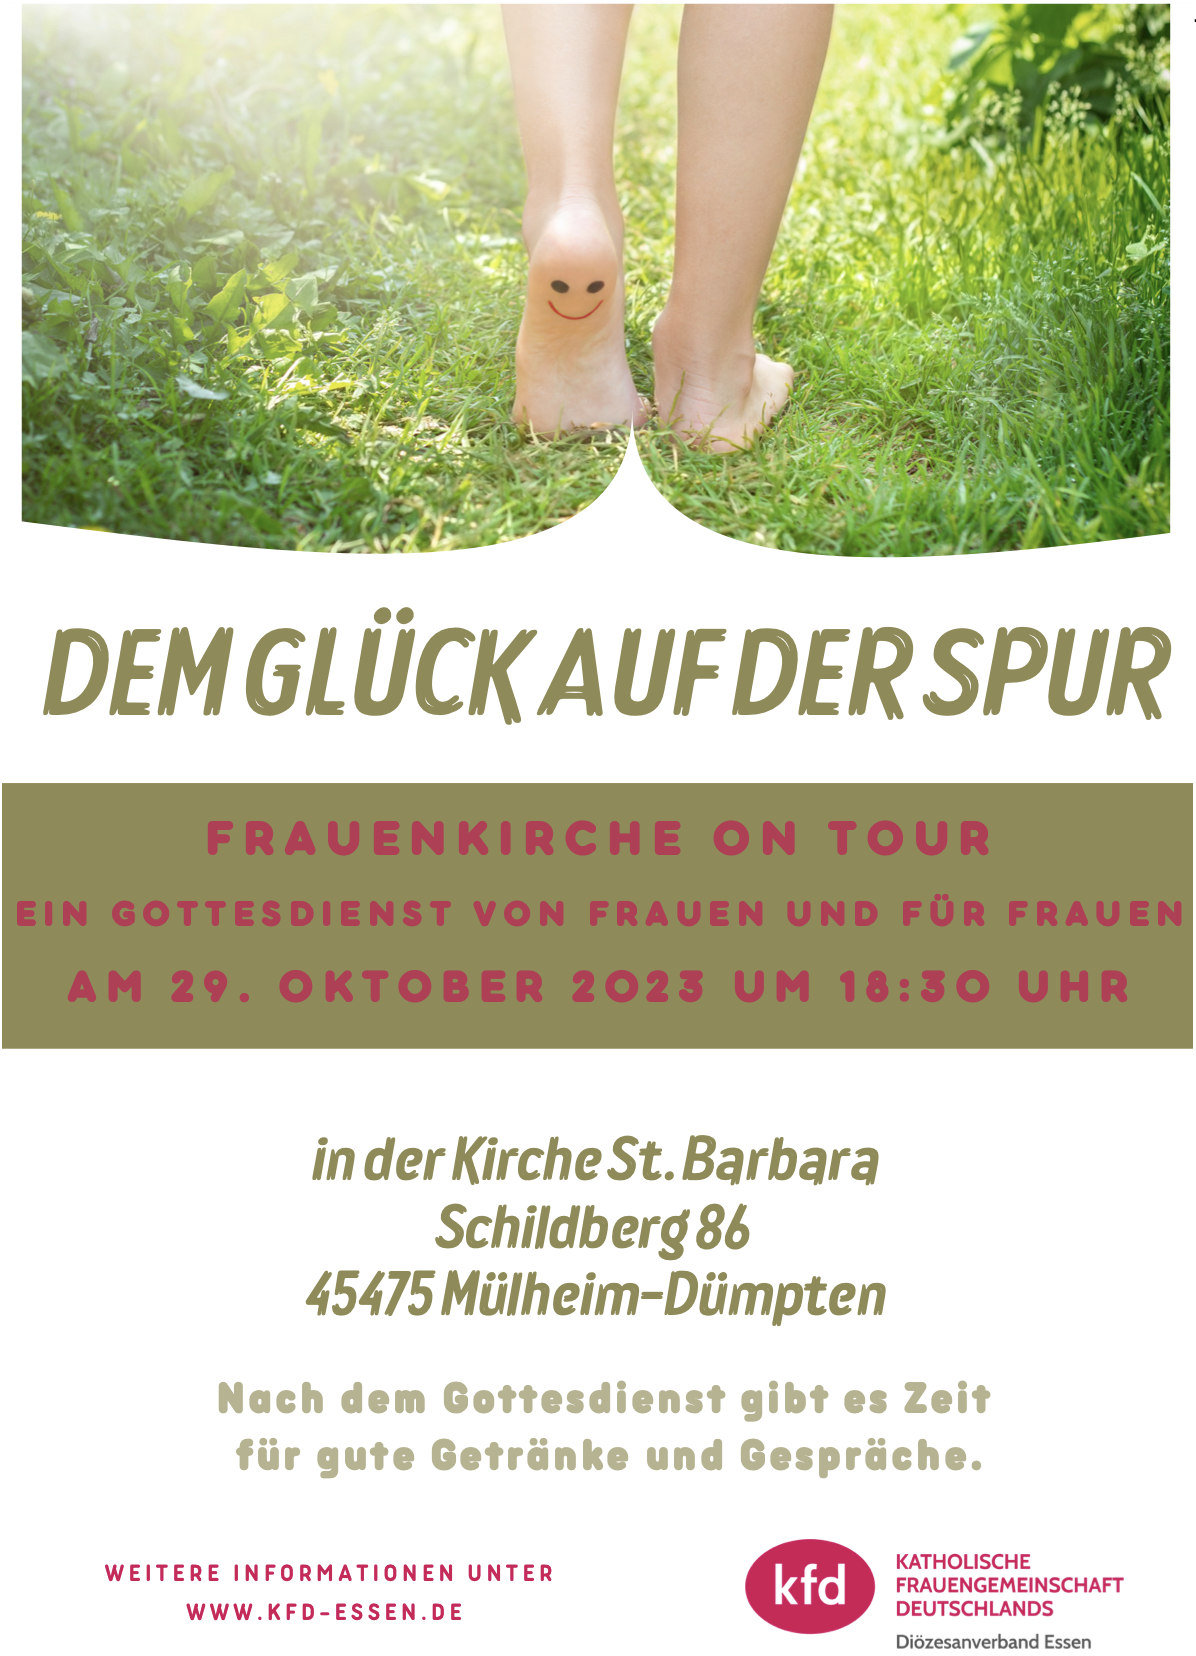 Frauenkirche on tour 2023